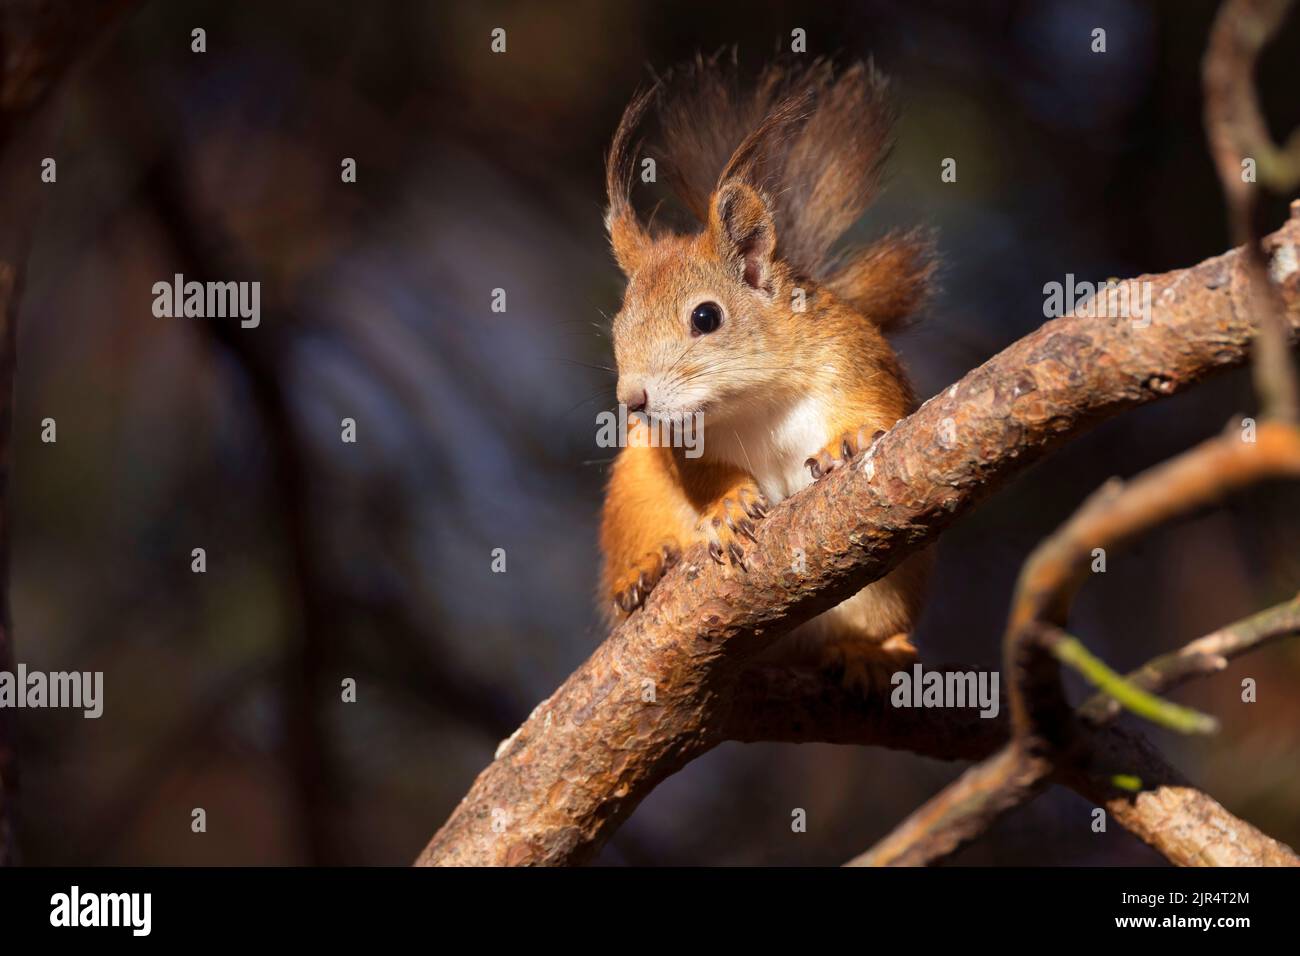 European red squirrel, Eurasian red squirrel (Sciurus vulgaris), sitting on a branch, front view, Scandinavia Stock Photo